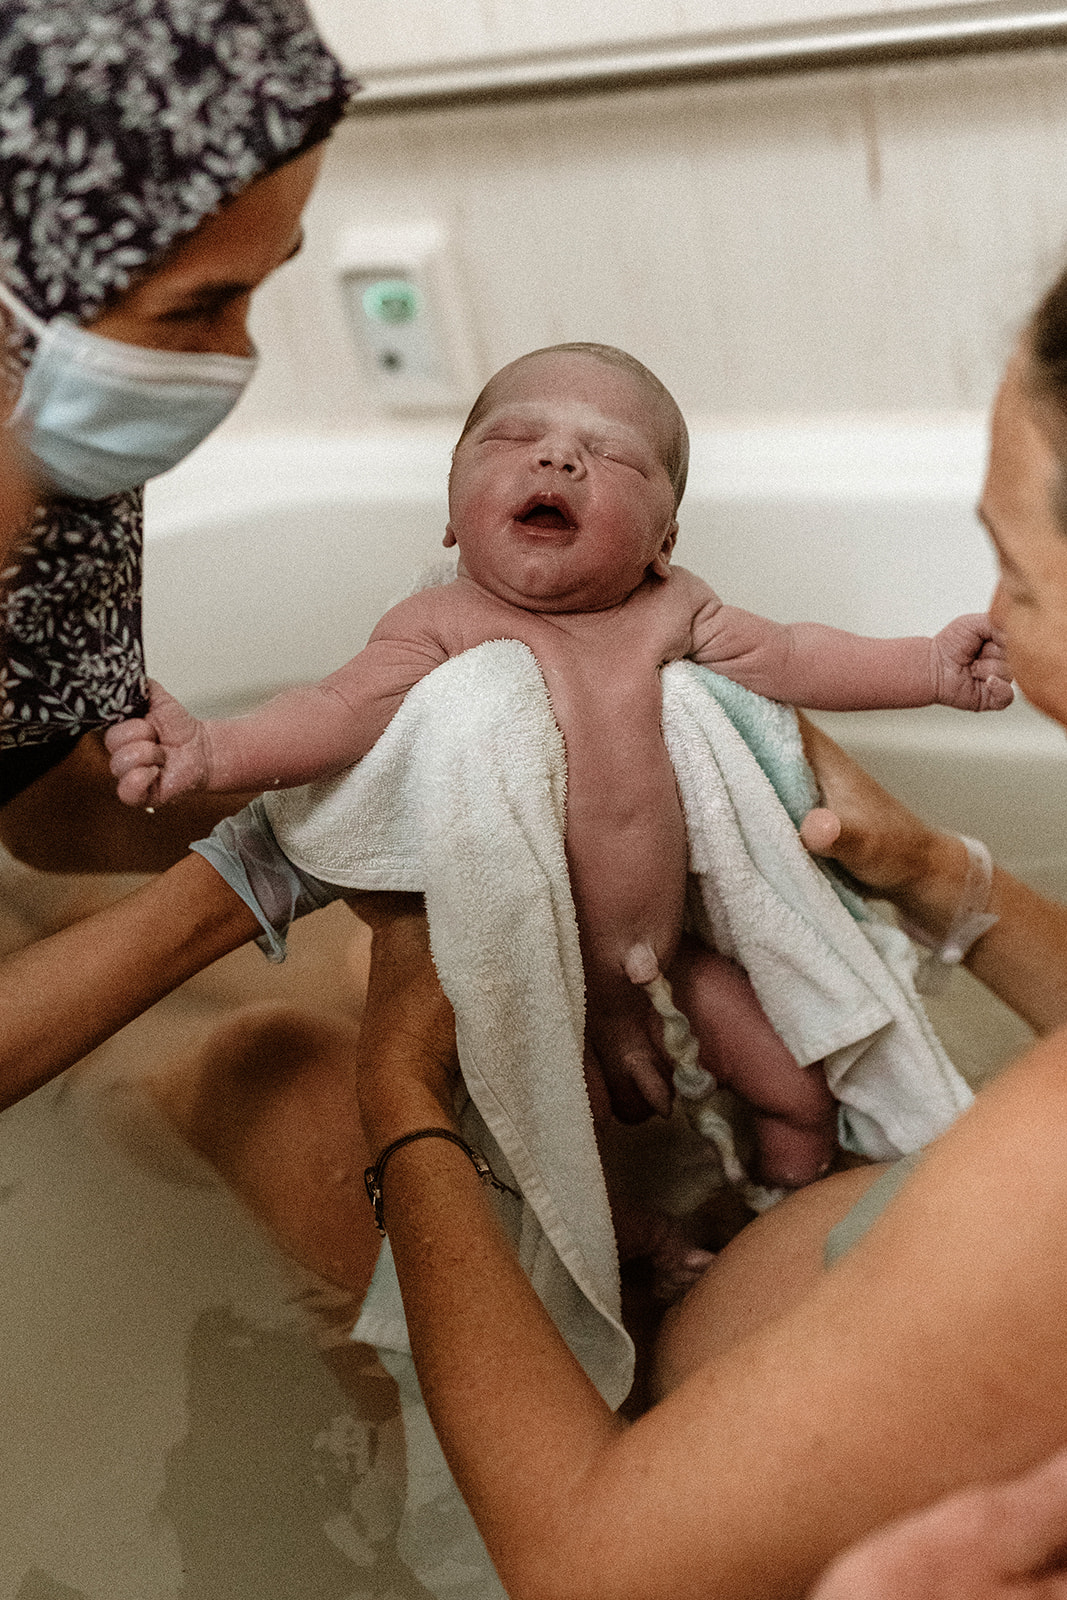 Gold Coast birth photography captured at Tweed Heads Hospital